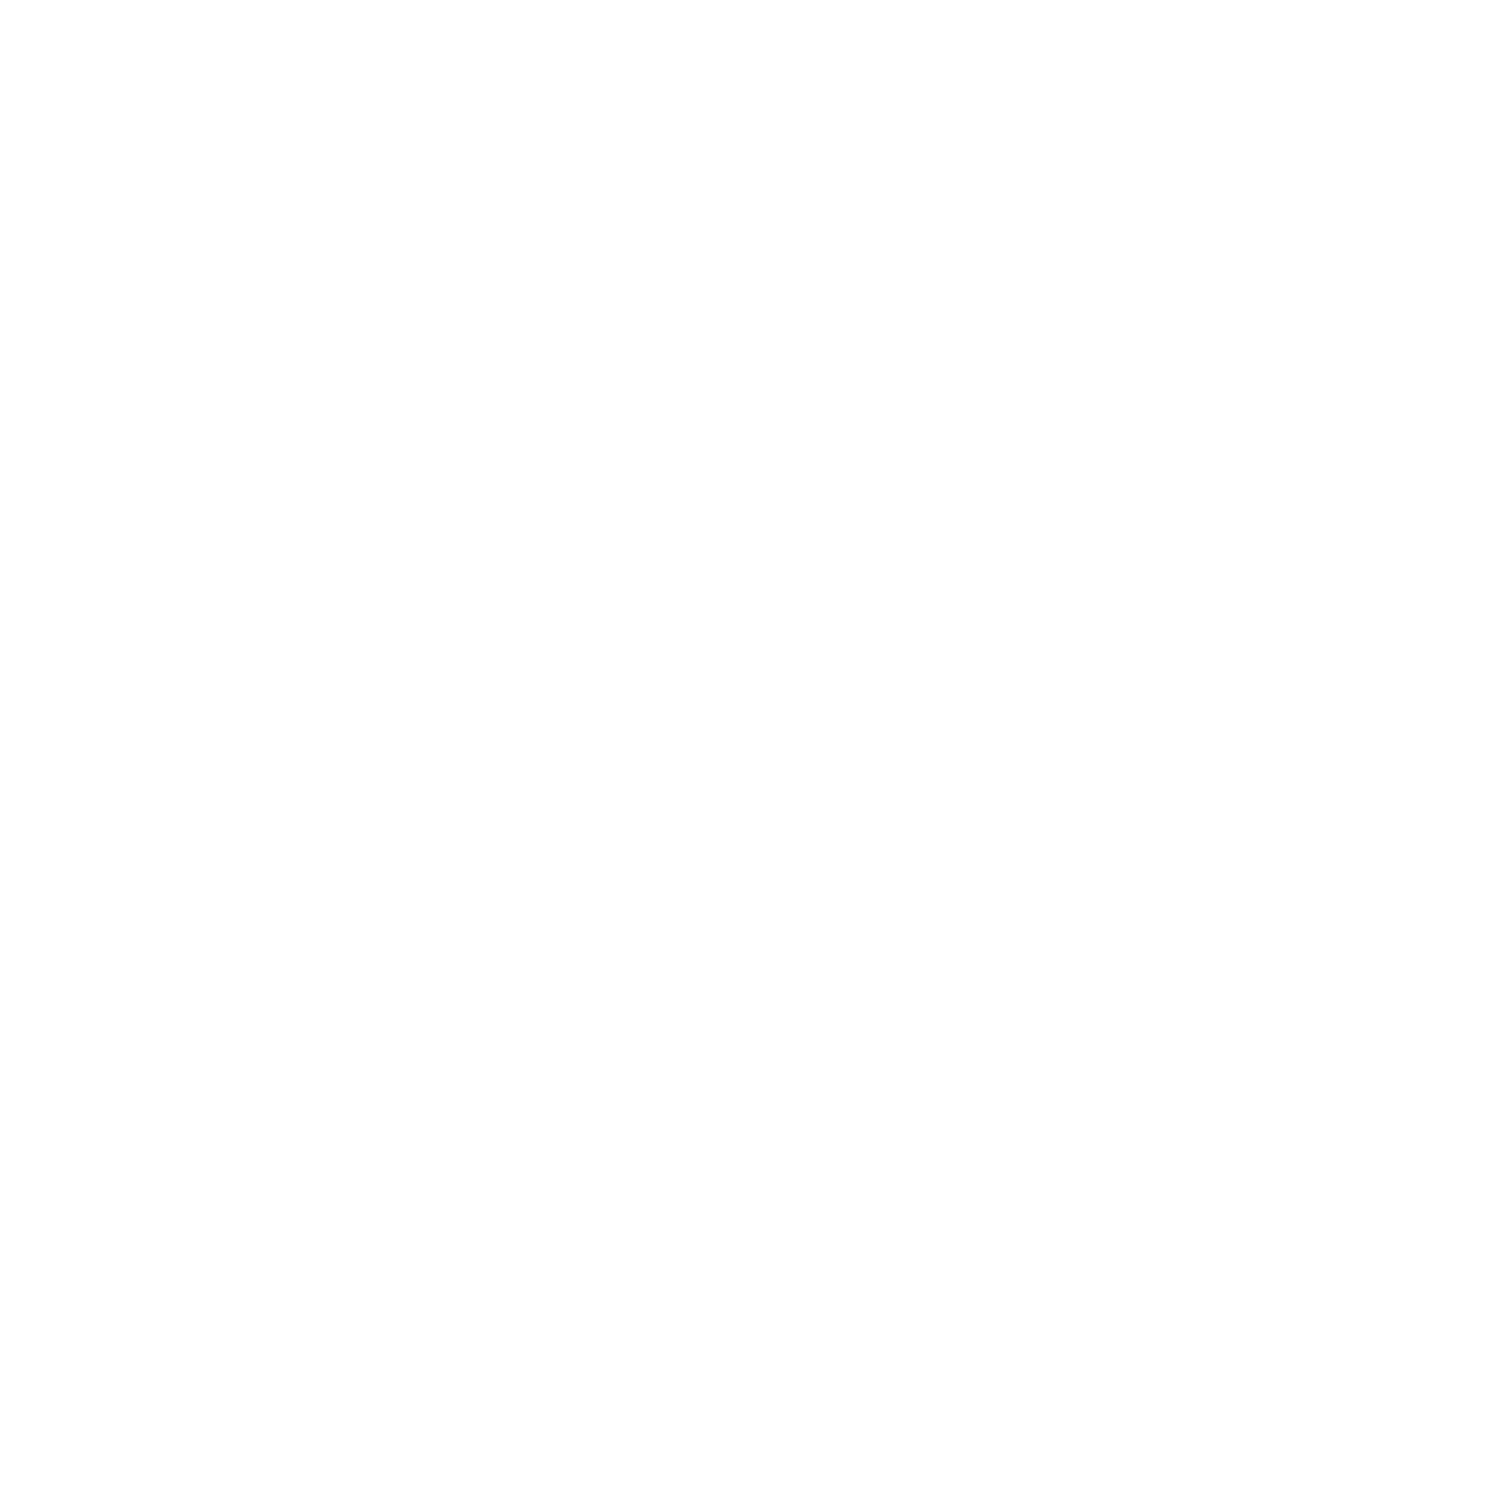 Marine Pro AS | Pioner i miljøvennlig skrogrenseløsninger. 